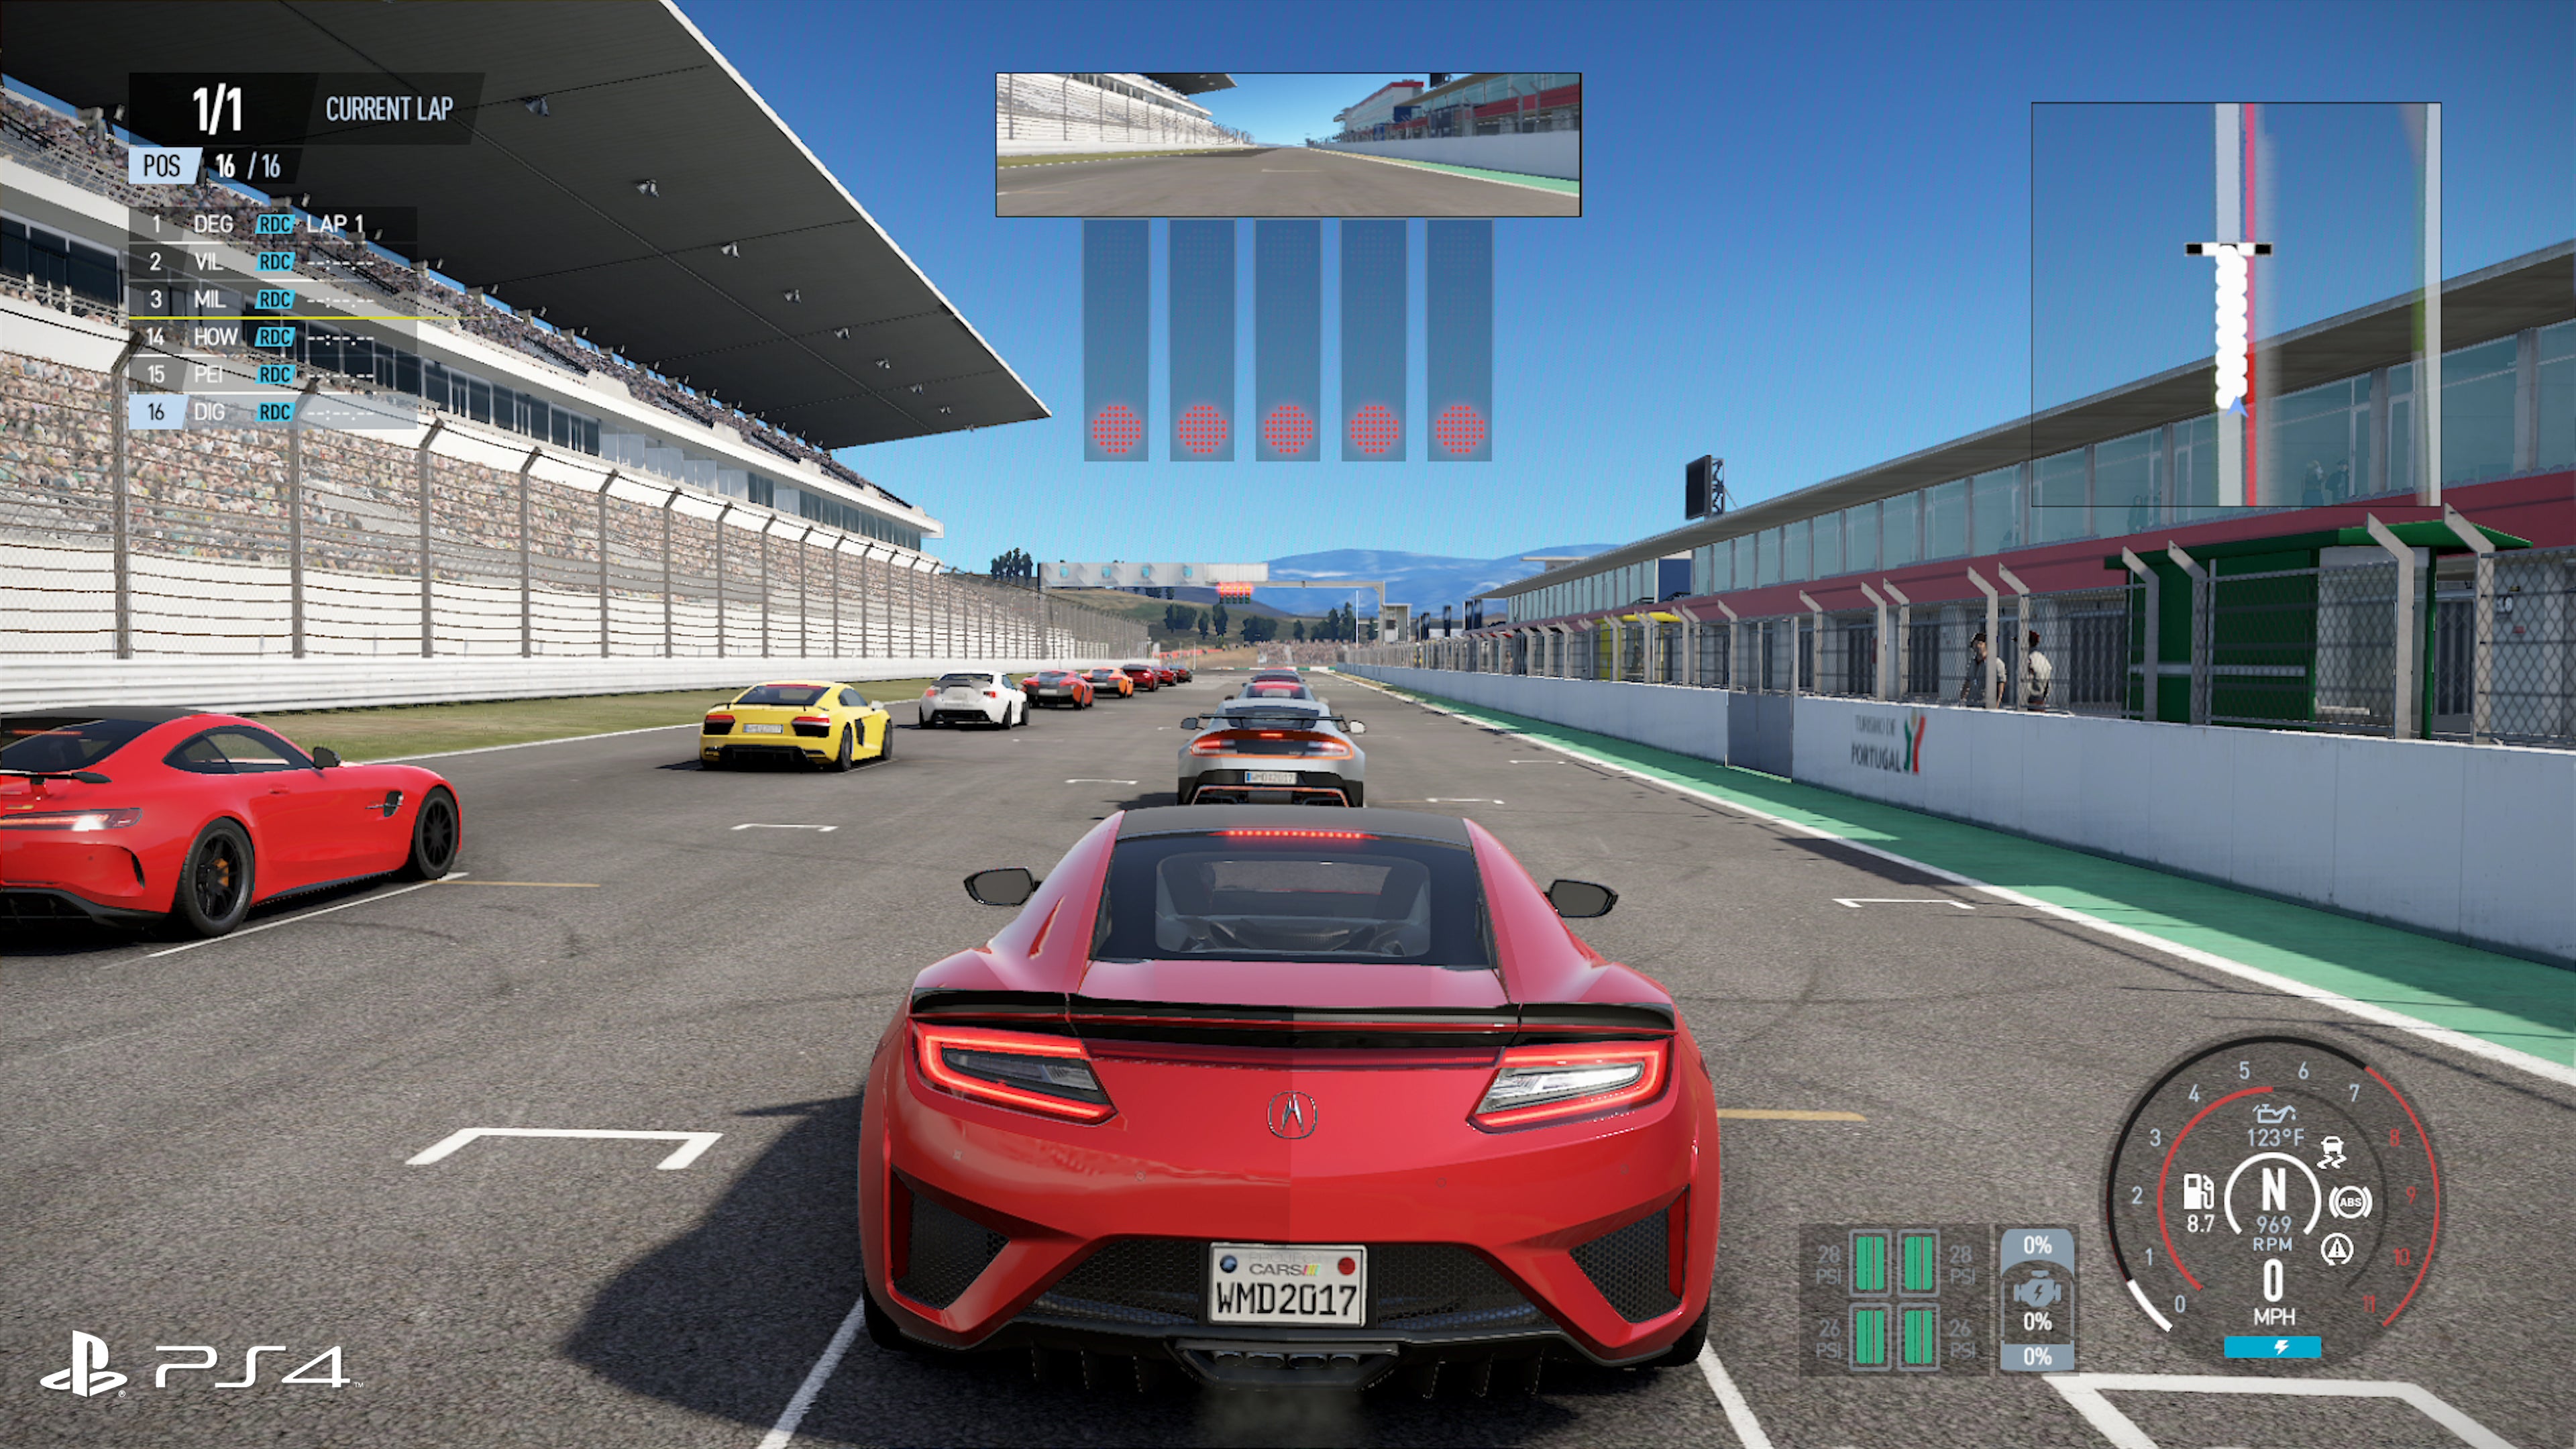 Shaded Spanien Tilbageholdenhed Project Cars 2 runs best on PlayStation 4 Pro | Eurogamer.net